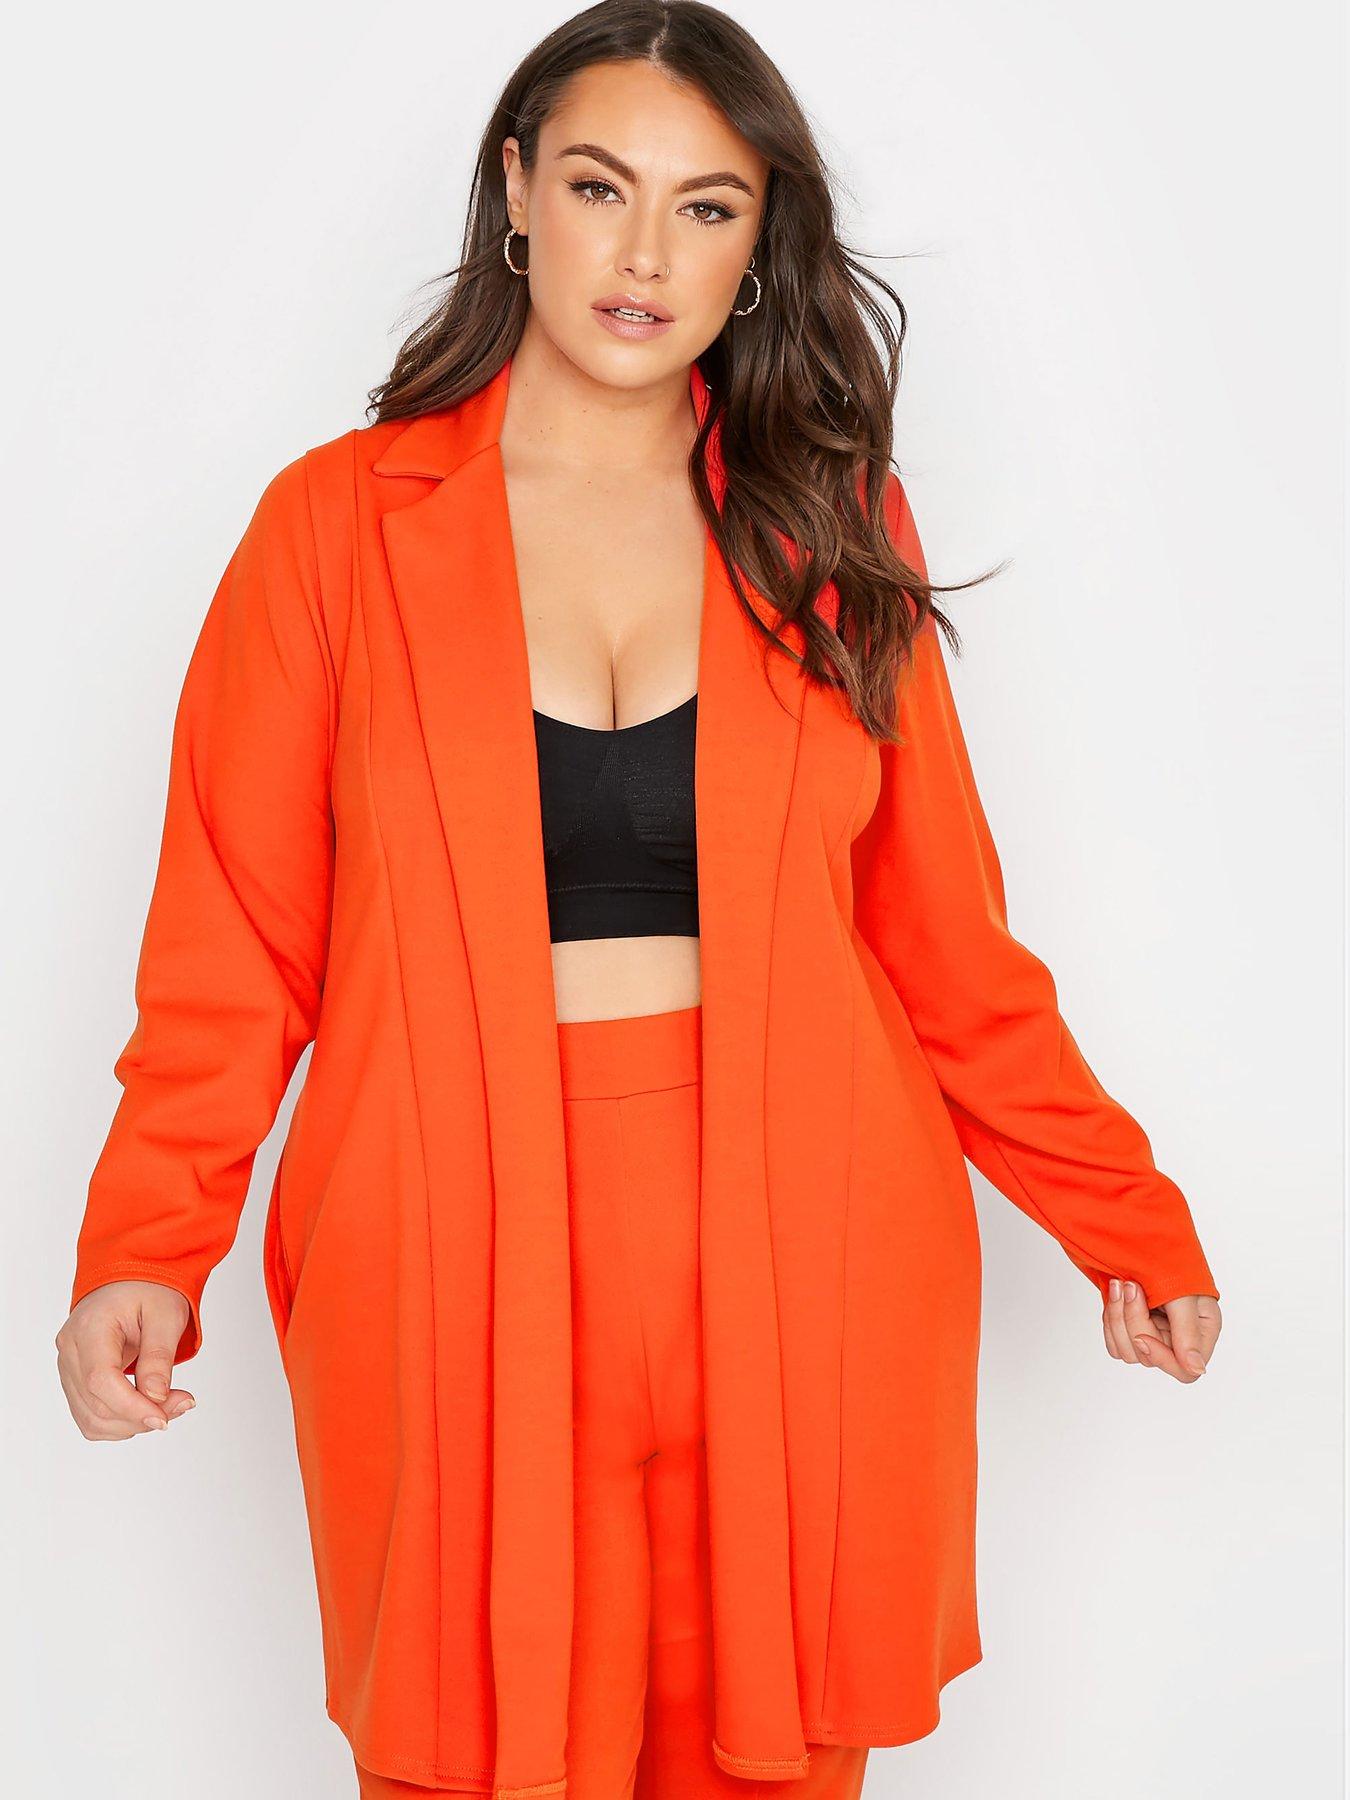 Womens New Blazer Open front Jacket Coral Orange Ladies Plus Size 